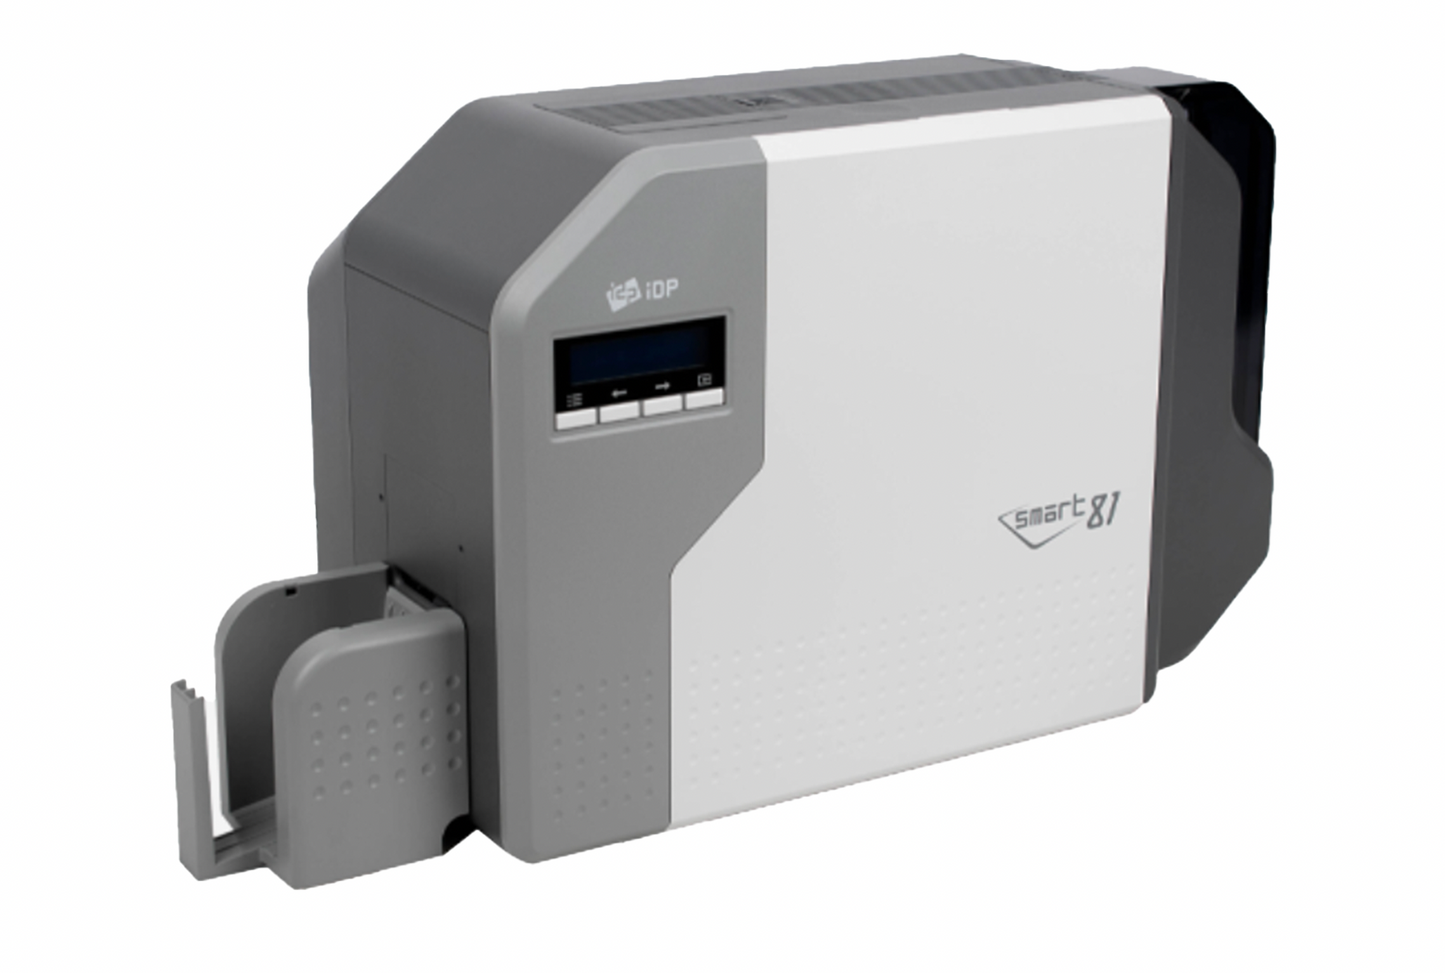 IDP SMART-81 ReTransfer Printer